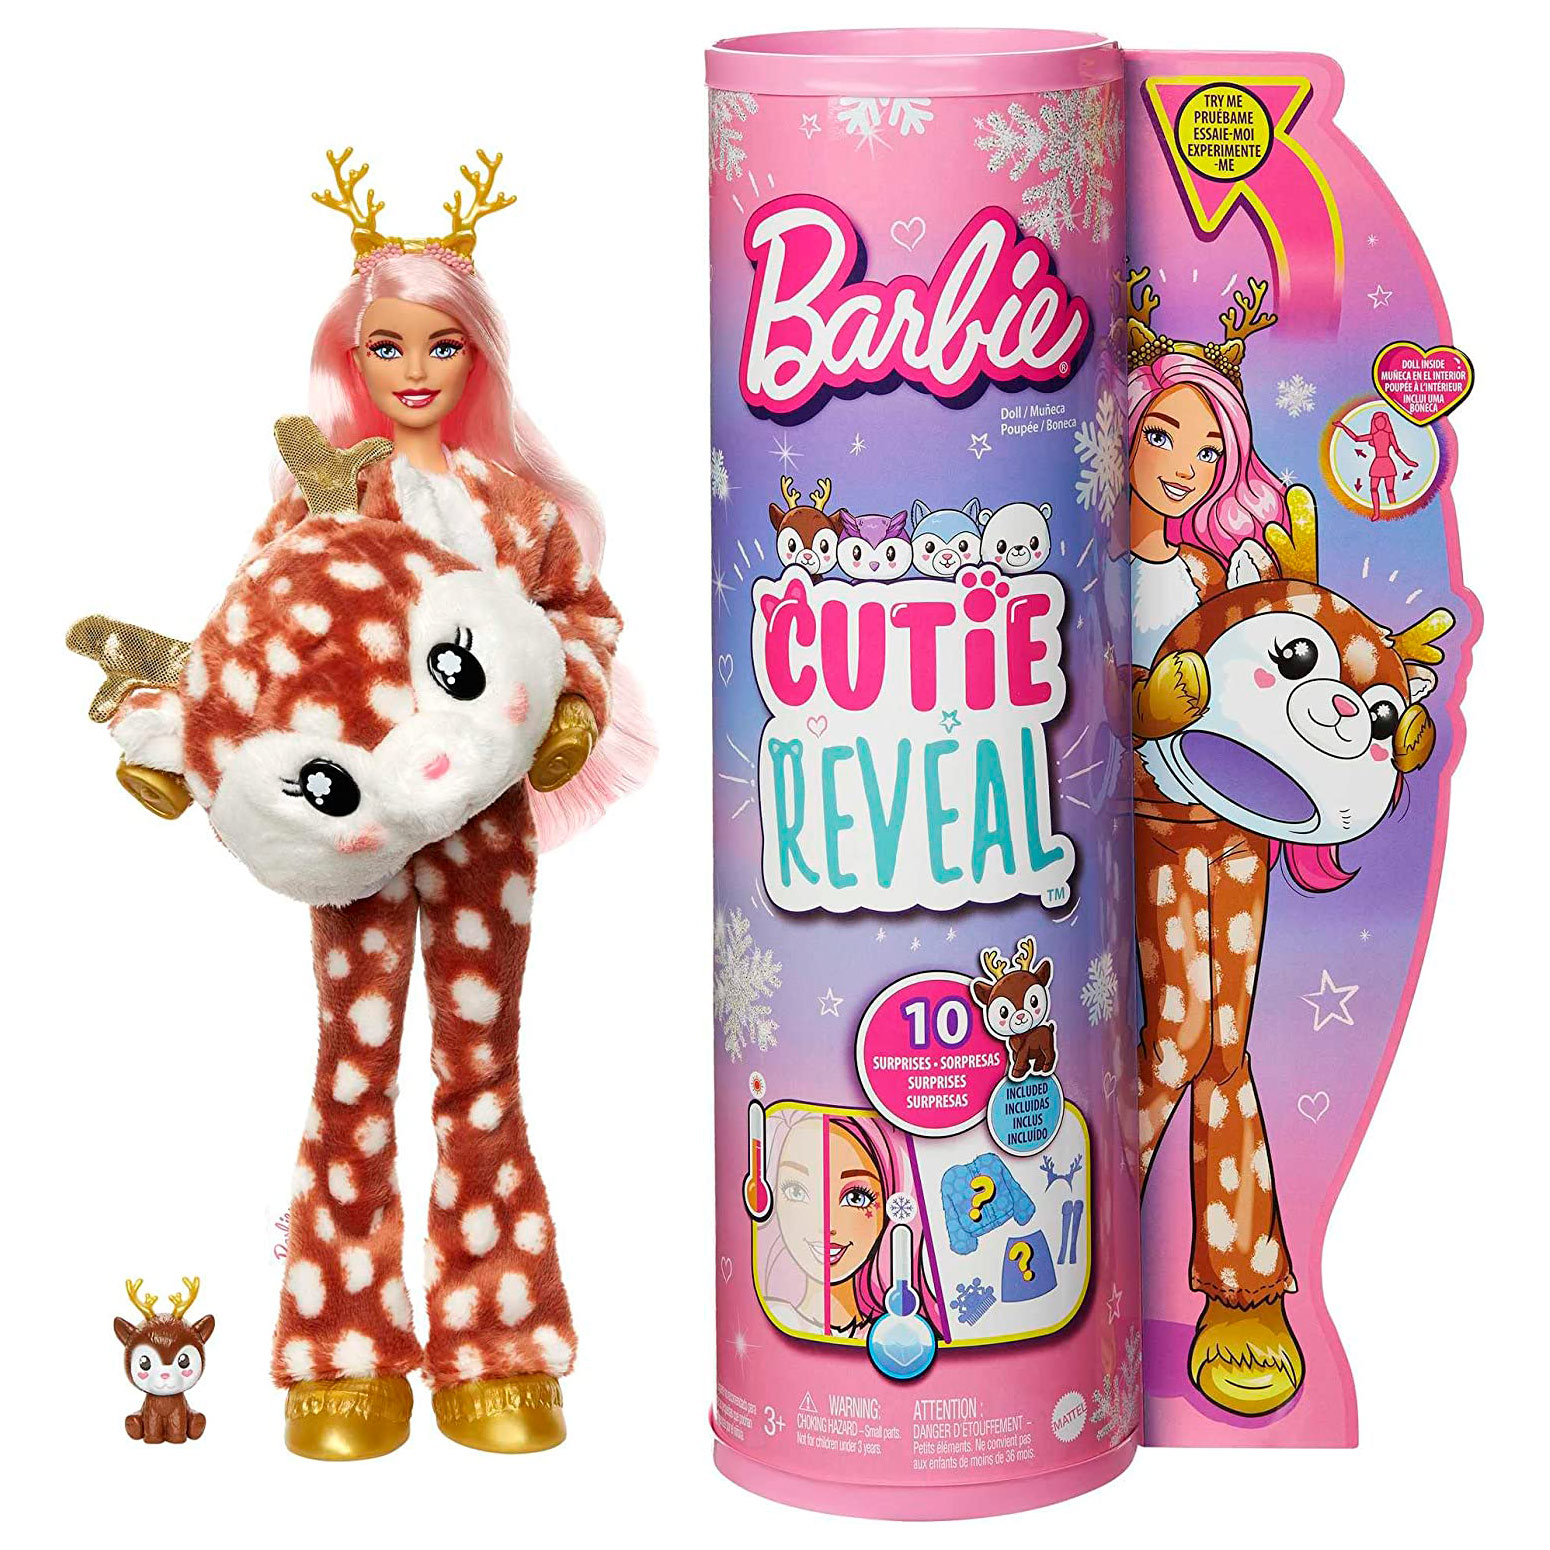 Barbie Cutie Reveal Chelsea Doll Jungle Series - Elephant